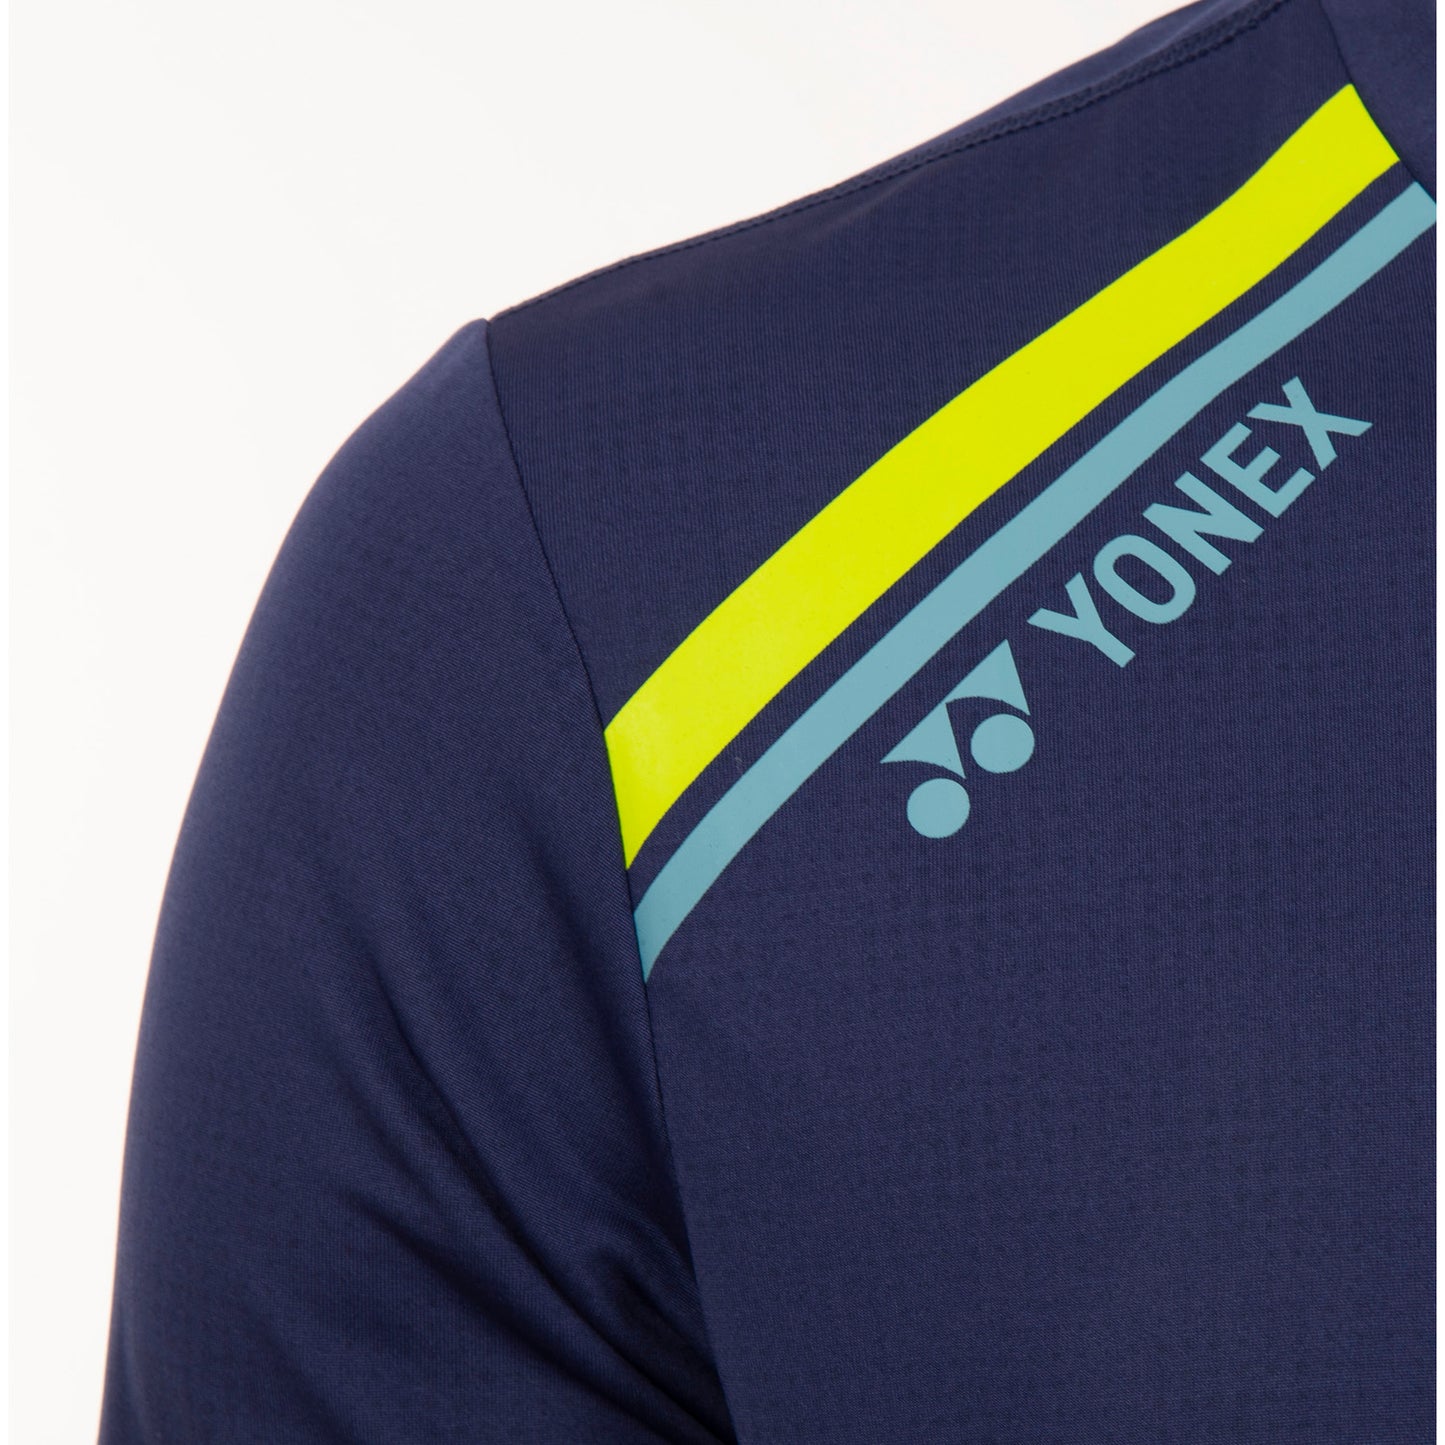 Yonex Badminton Round Neck T Shirt, Patriot Blue - Best Price online Prokicksports.com